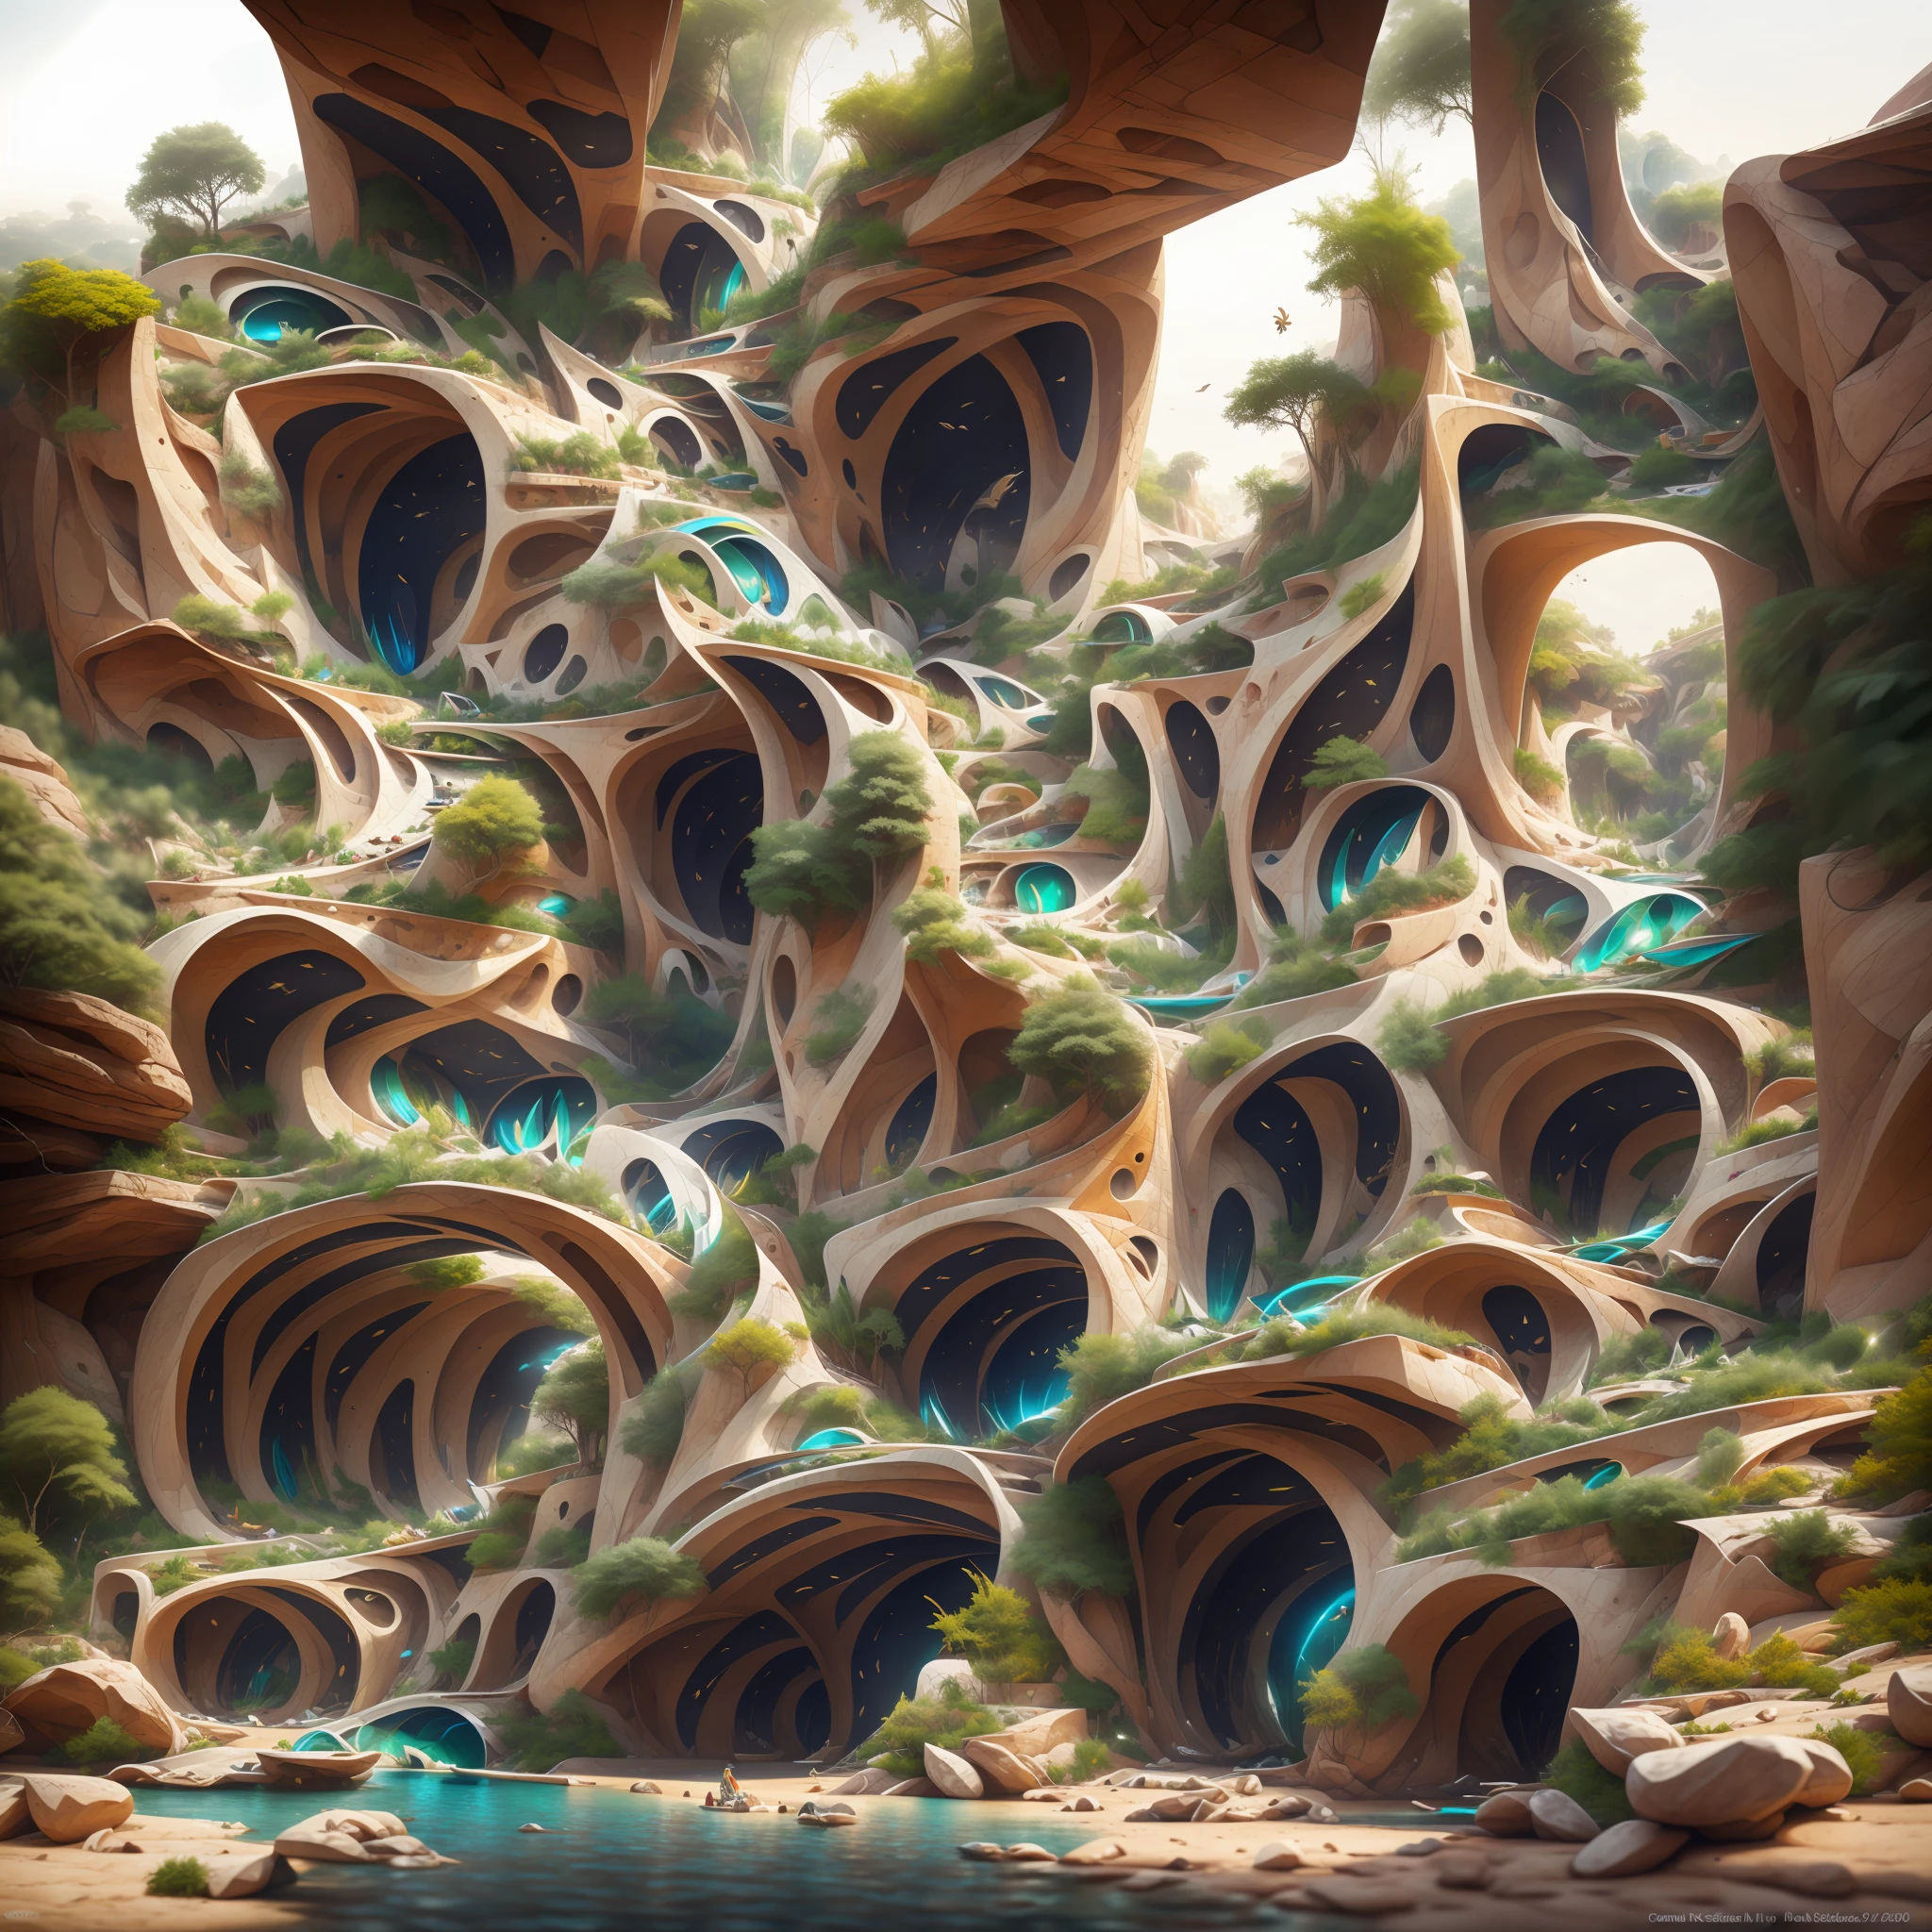 :an awesome sunny cheerful day environment concept art of Futuristic design of cave architecture interiors concept art on grand Canyon caves 自然建筑, 成比例的,详细的, 洞穴建筑，自然与未来主义建筑在雨林丛林悬崖上相遇，还有巨大的瀑布,暮光之光, 自然与 Aries Moross 风格的现代建筑相融合, 雷姆·库哈斯,丹尼尔·里伯斯金, 让·努维尔, 保罗·索莱里,伊东丰雄 (Toyo Ito) 和菲利普·约翰逊 (Philip Johnson) 采用干笔绘画风格 ,明暗对照村,悬崖边住宅区, 混合开发,自然建筑,鲜艳的色彩,高层楼梯, 阳台, 玻璃幕墙,用岩石雕刻而成, 杰作, 成比例的, 详细的, artstation 上的热门, 美丽的灯光, 实际的, 错综复杂